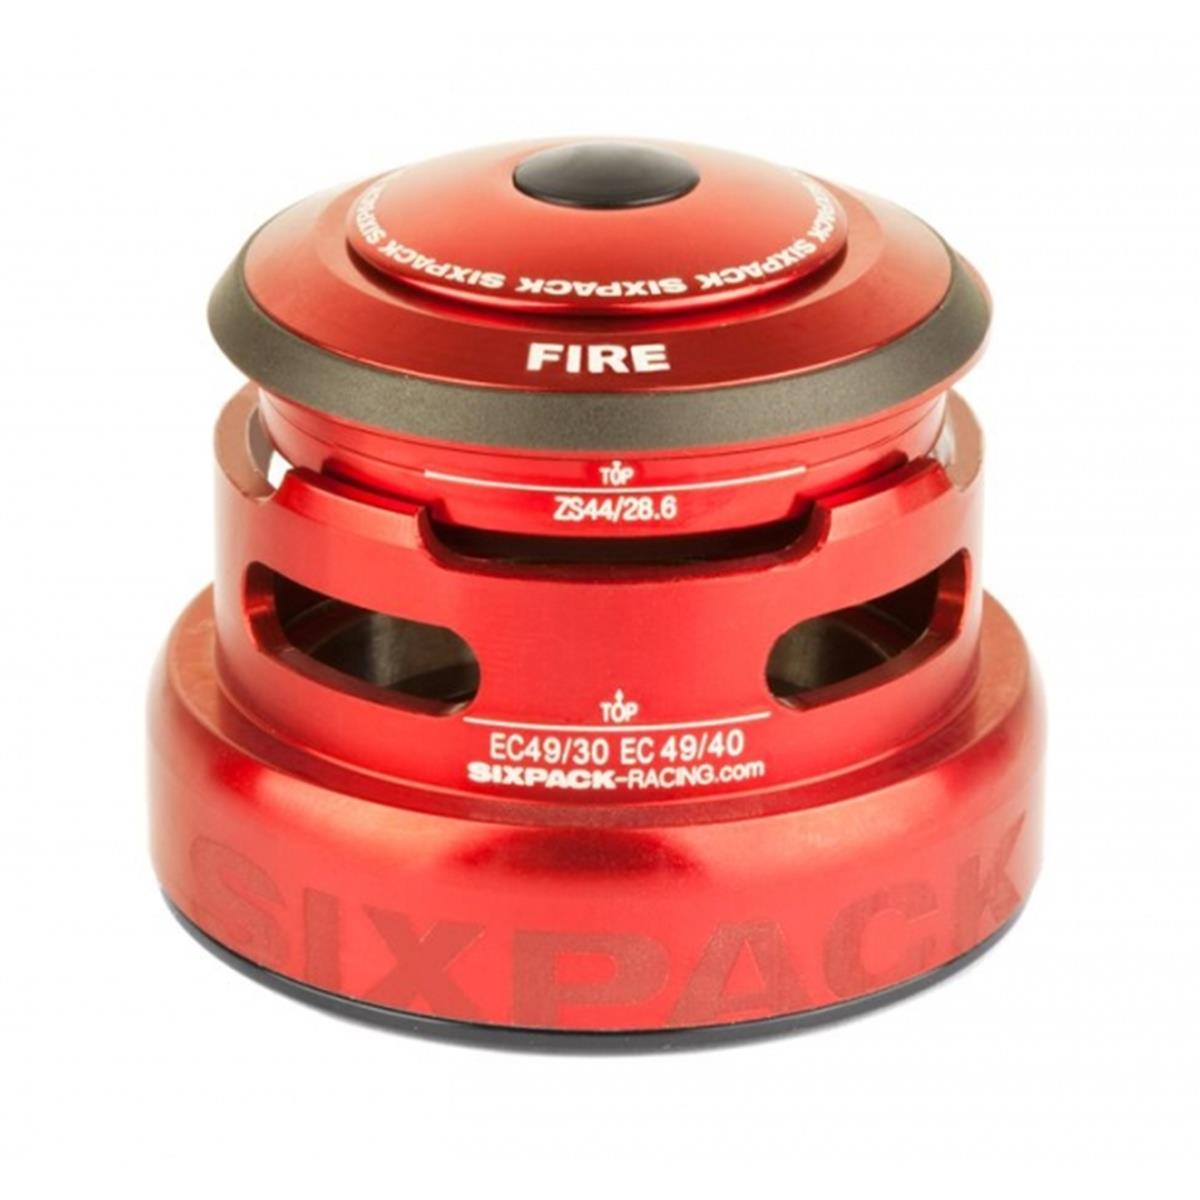 Sixpack Headset Fire 2in1 Red, ZS44/28.6 I EC49/30 & ZS44/28.6 I EC49/40